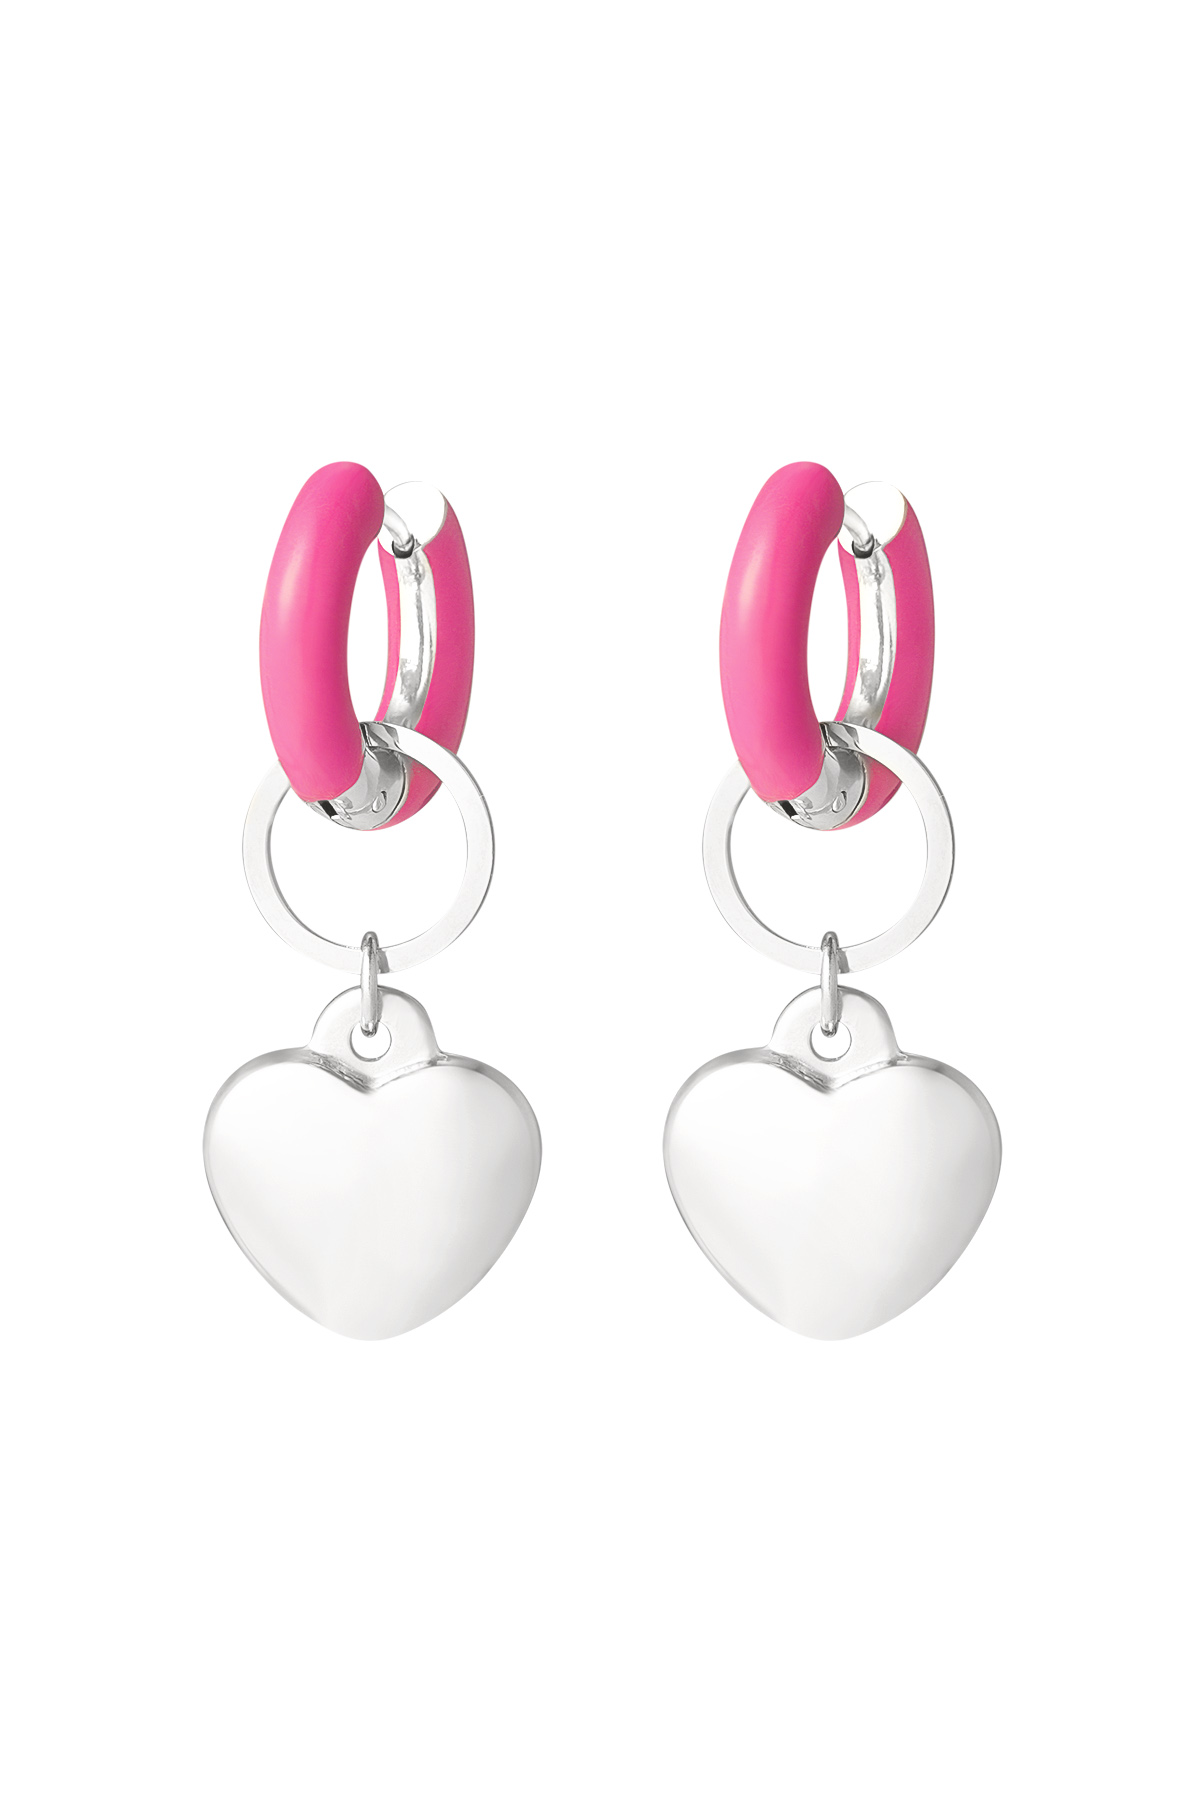 Ohrring farbiger Ring mit Herz rosa - Silber